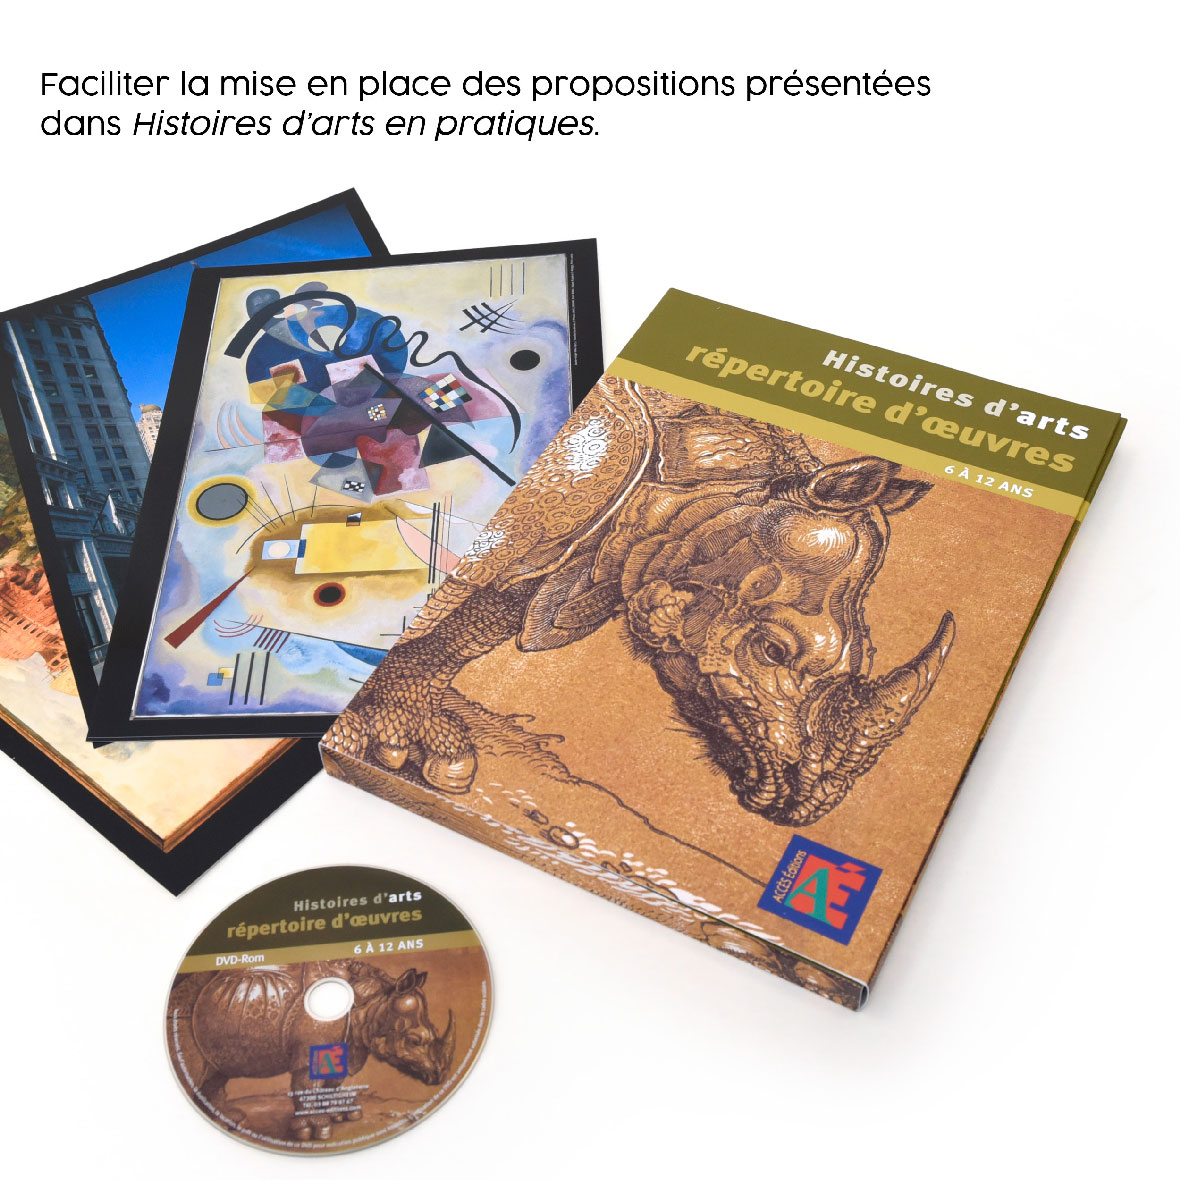 Histoires d arts repertoire d oeuvres miniature 2 acces editions